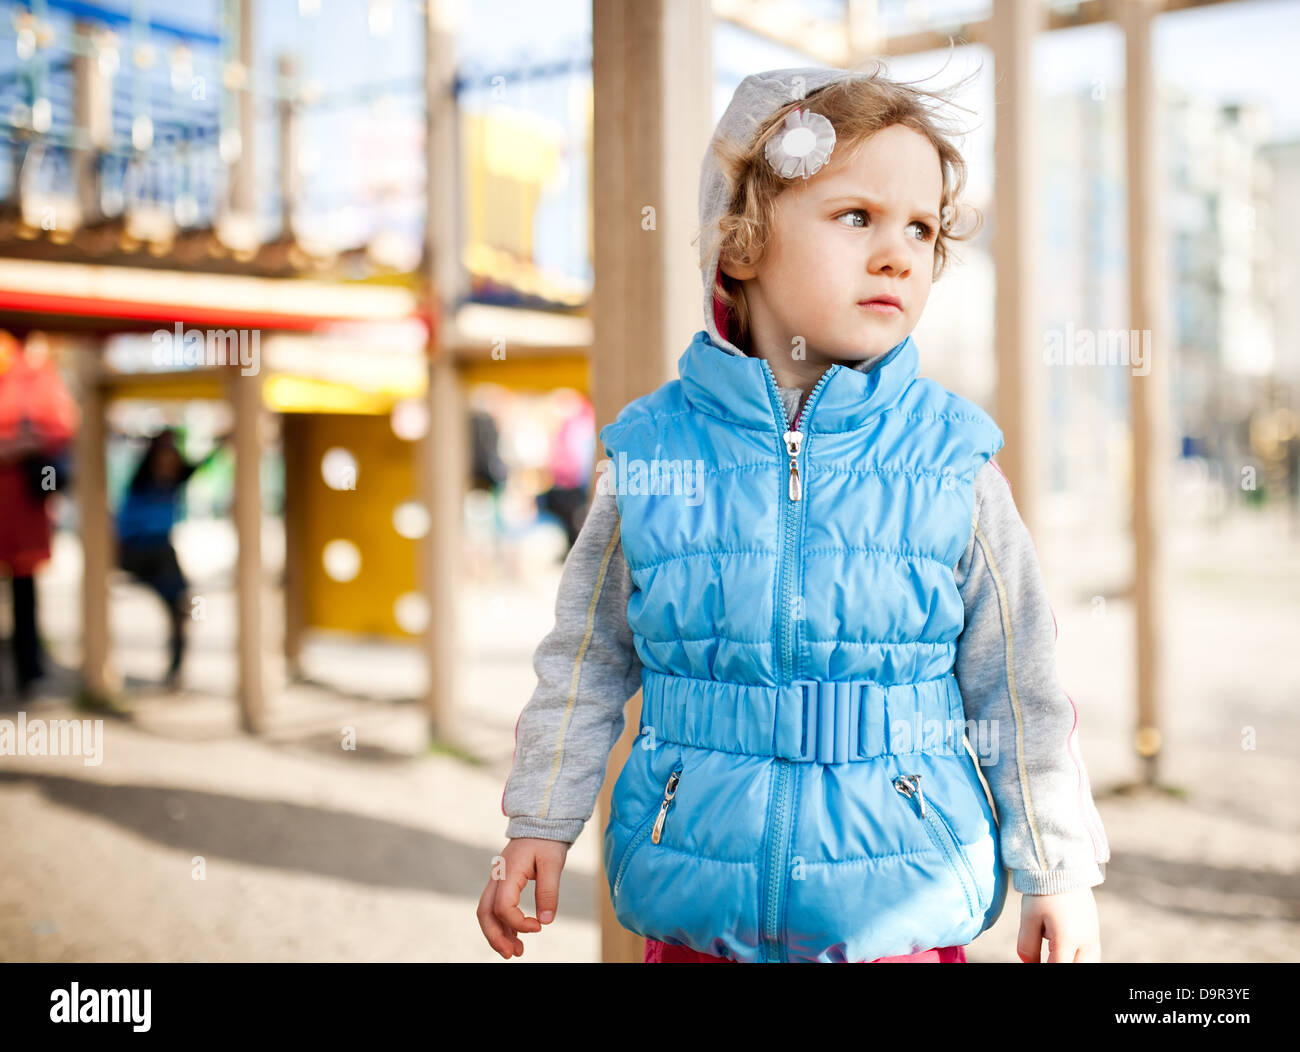 Pensive Little girl on playground area Stock Photo